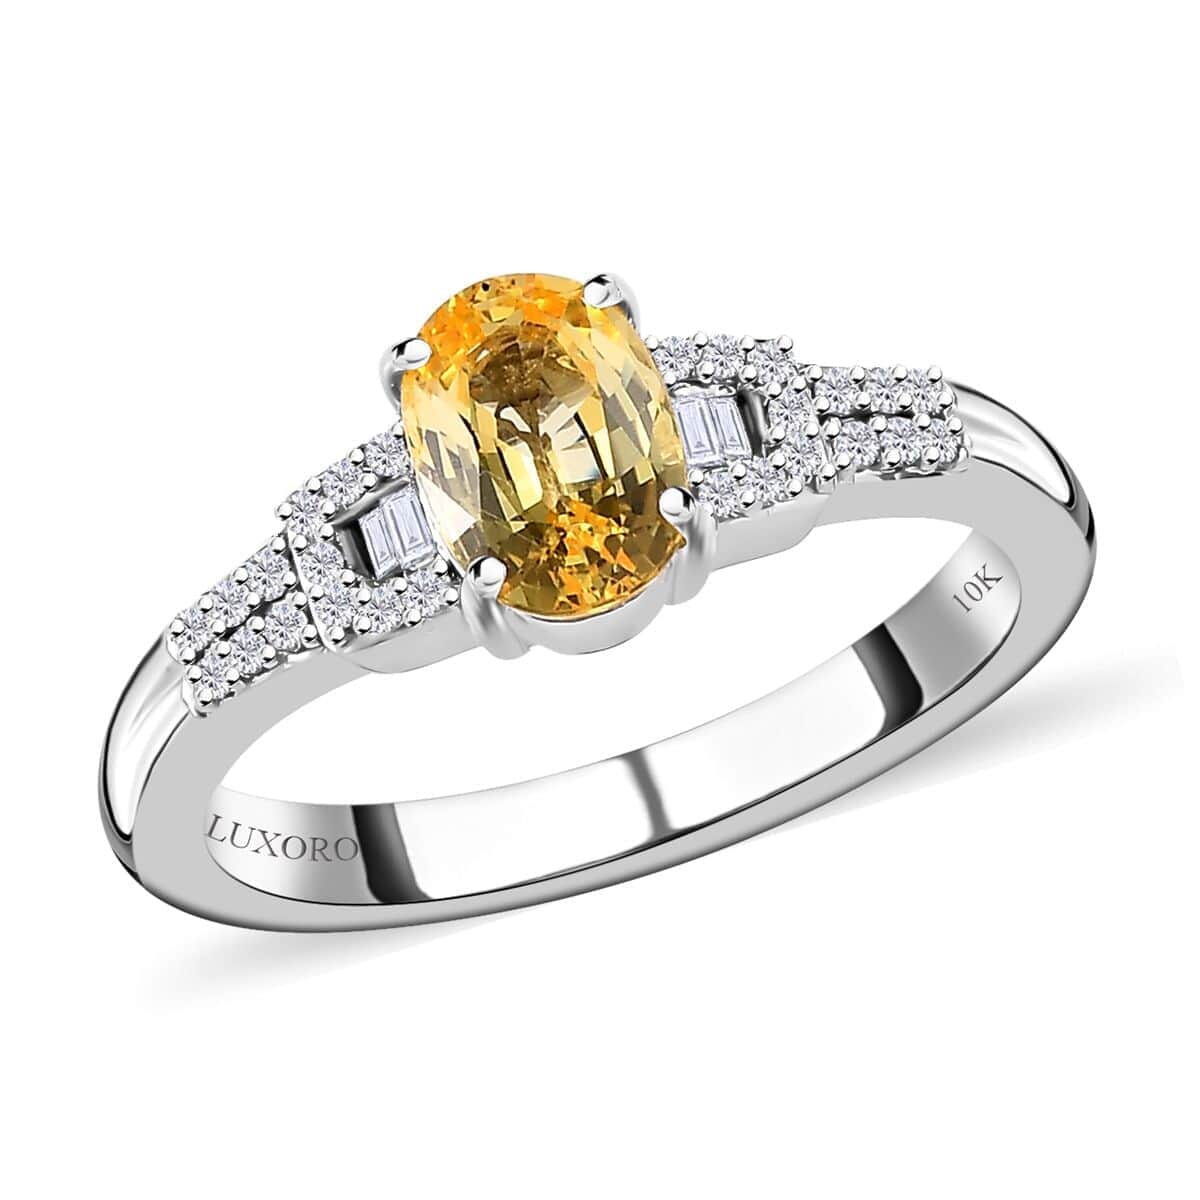 Luxoro 10K White Gold Premium Natural Ceylon Yellow Sapphire and G-H I2 Diamond Ring (Size 7.0) 1.35 ctw image number 0